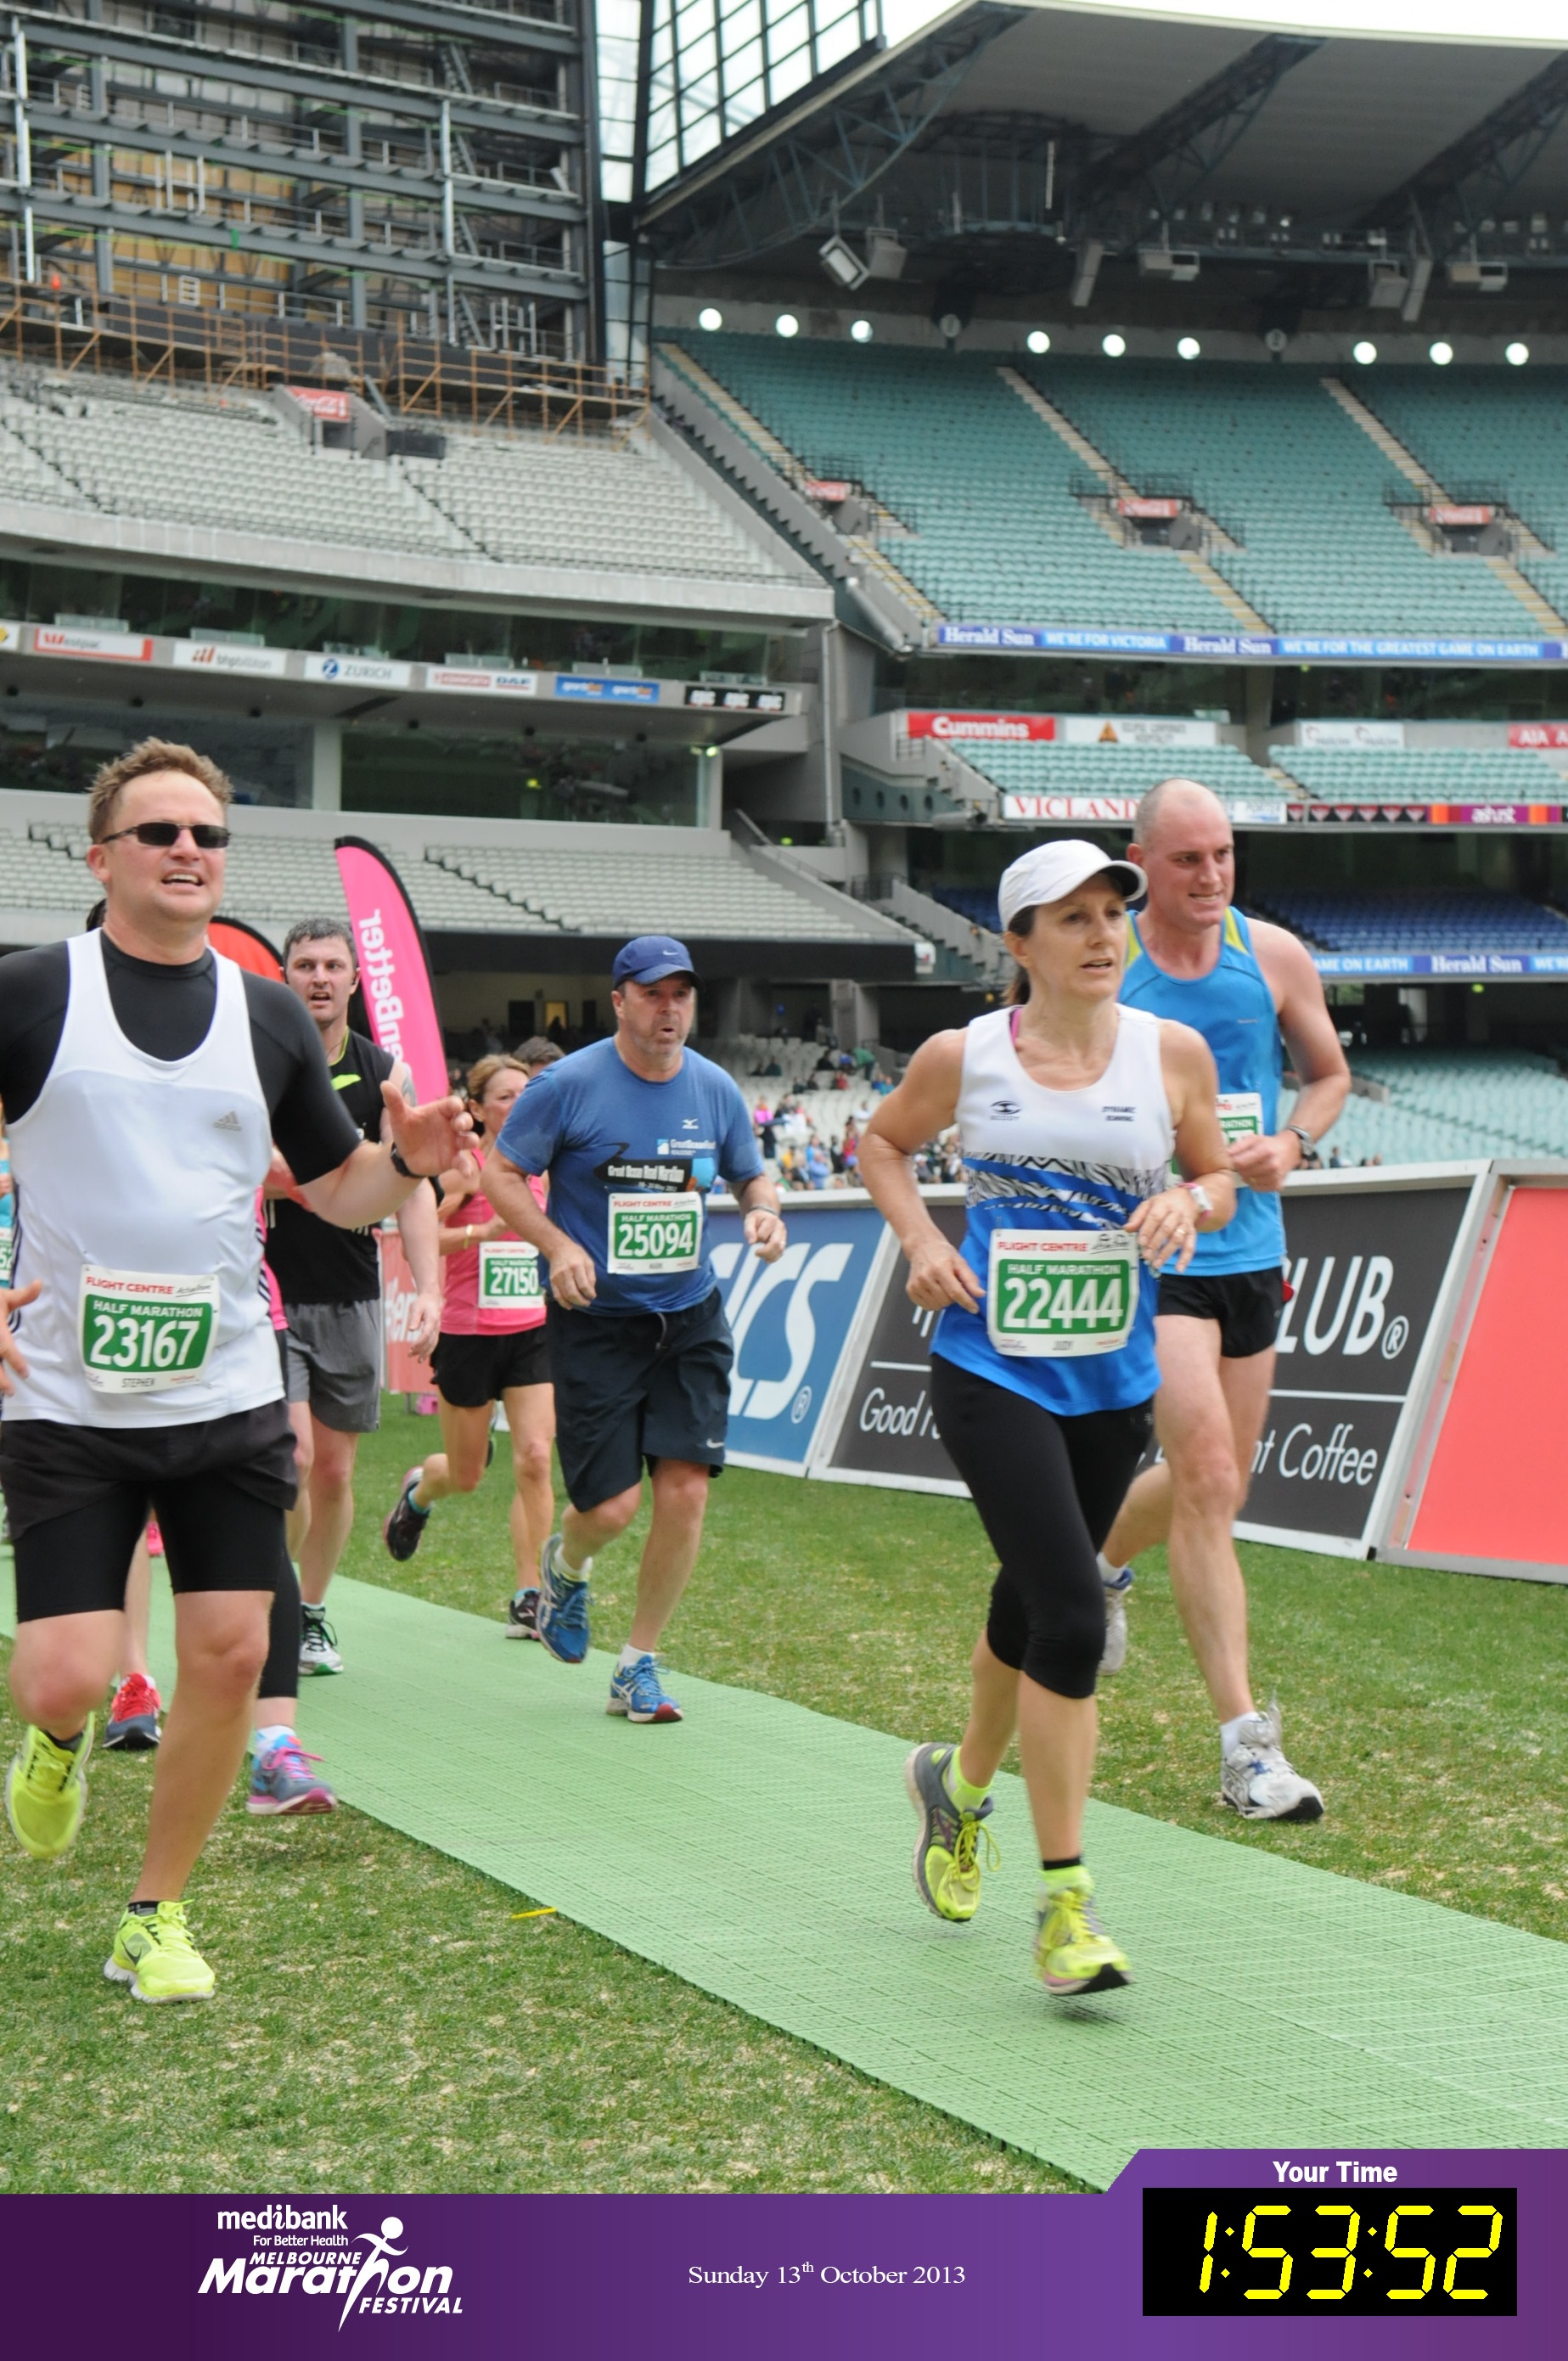 Judy finishing the Melbourne Half Marathon in October 2013.